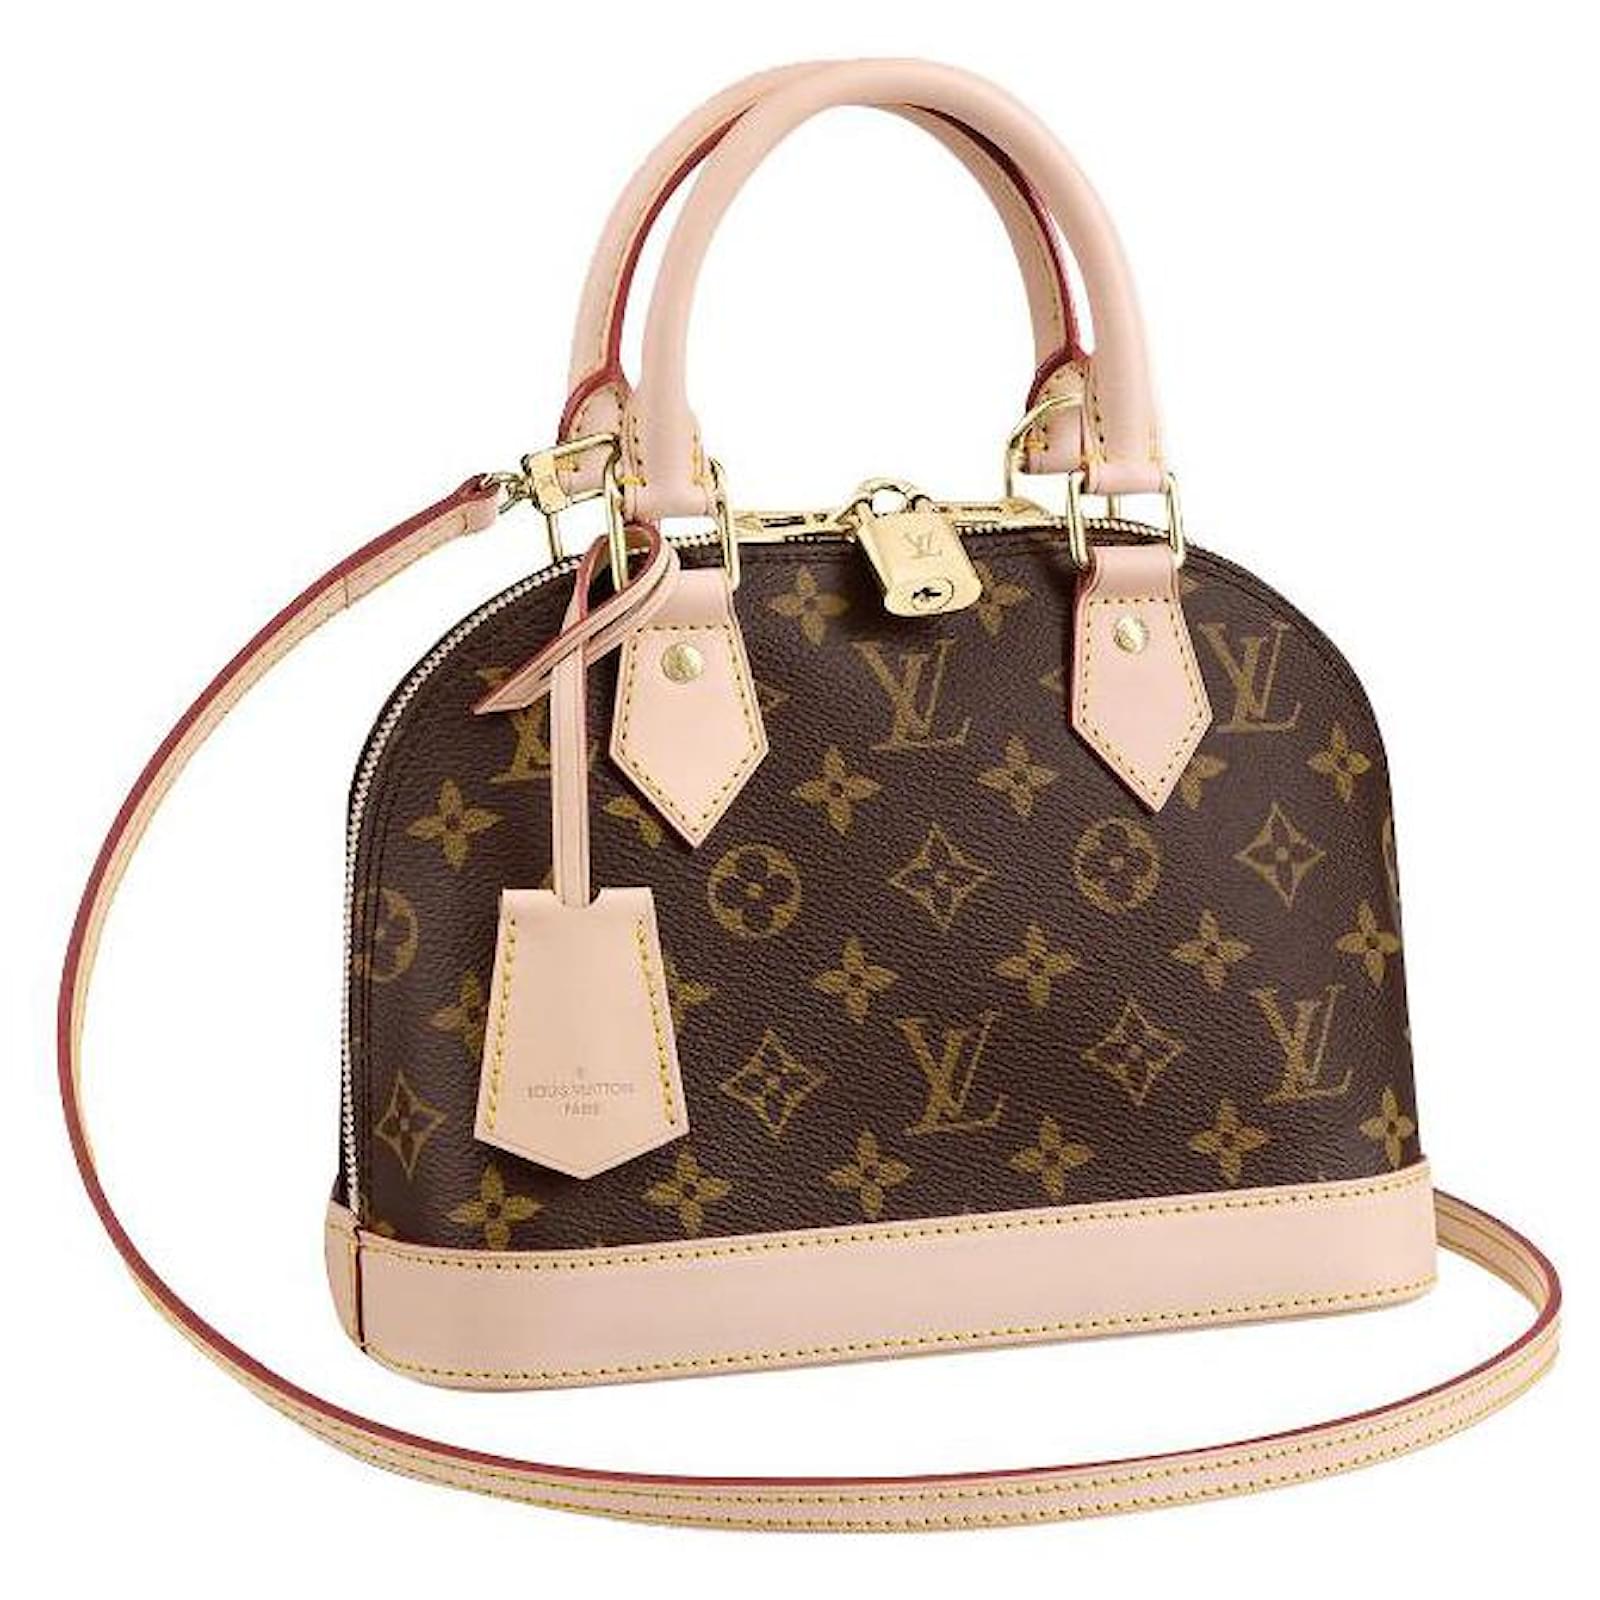 LV Handbags Louis Vuitton Alma PM Big size, For Office